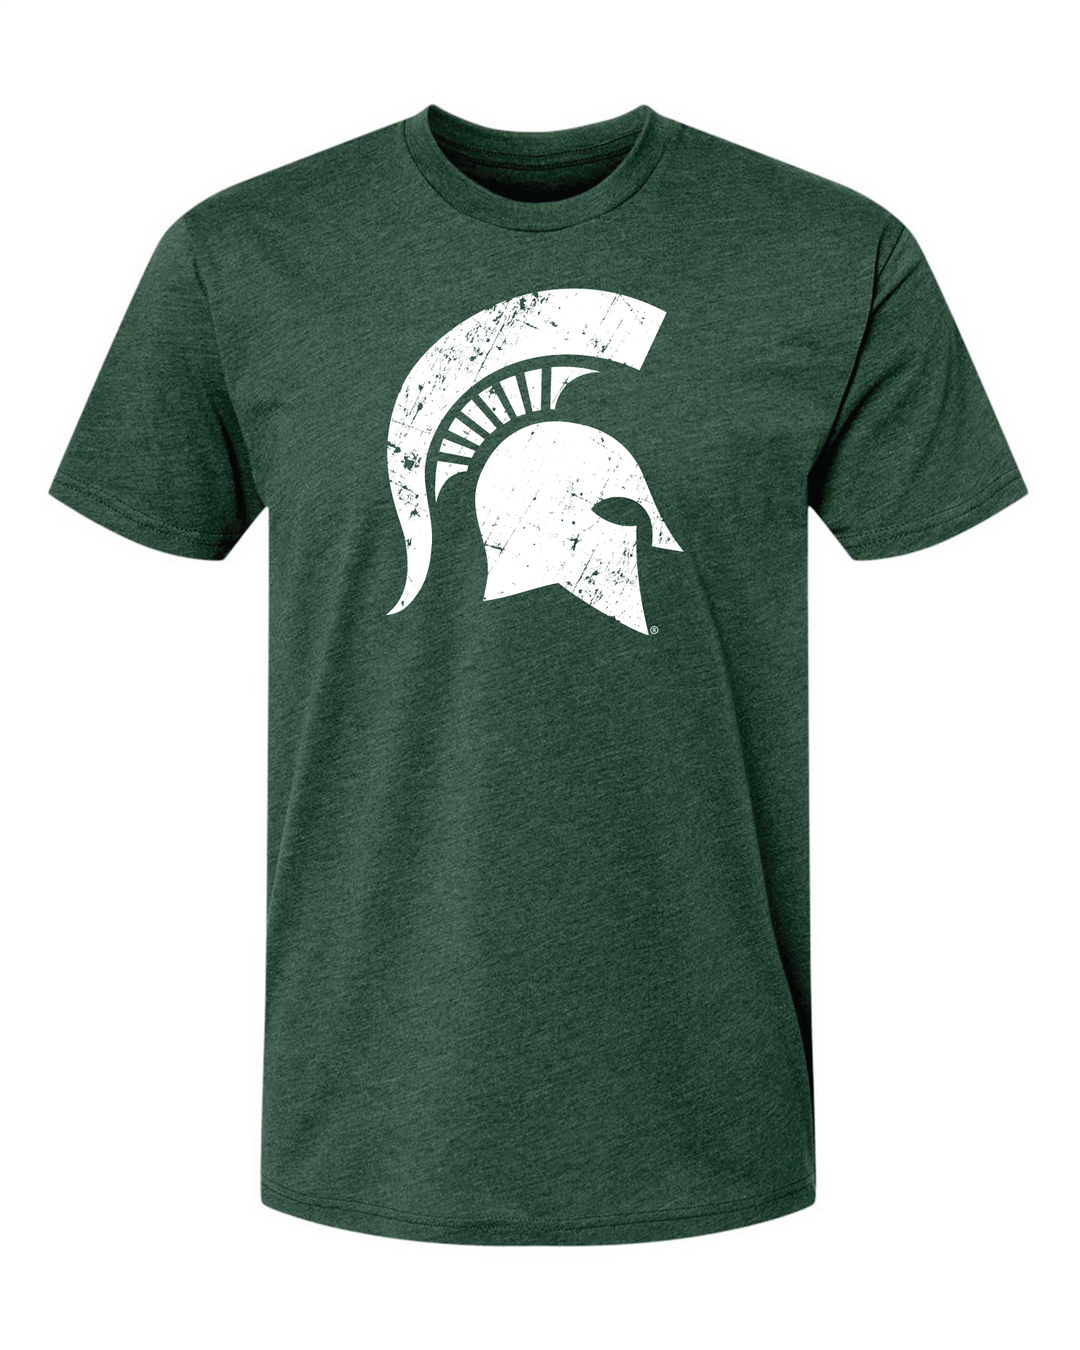 Green Michigan State Spartan Helmet T-Shirt